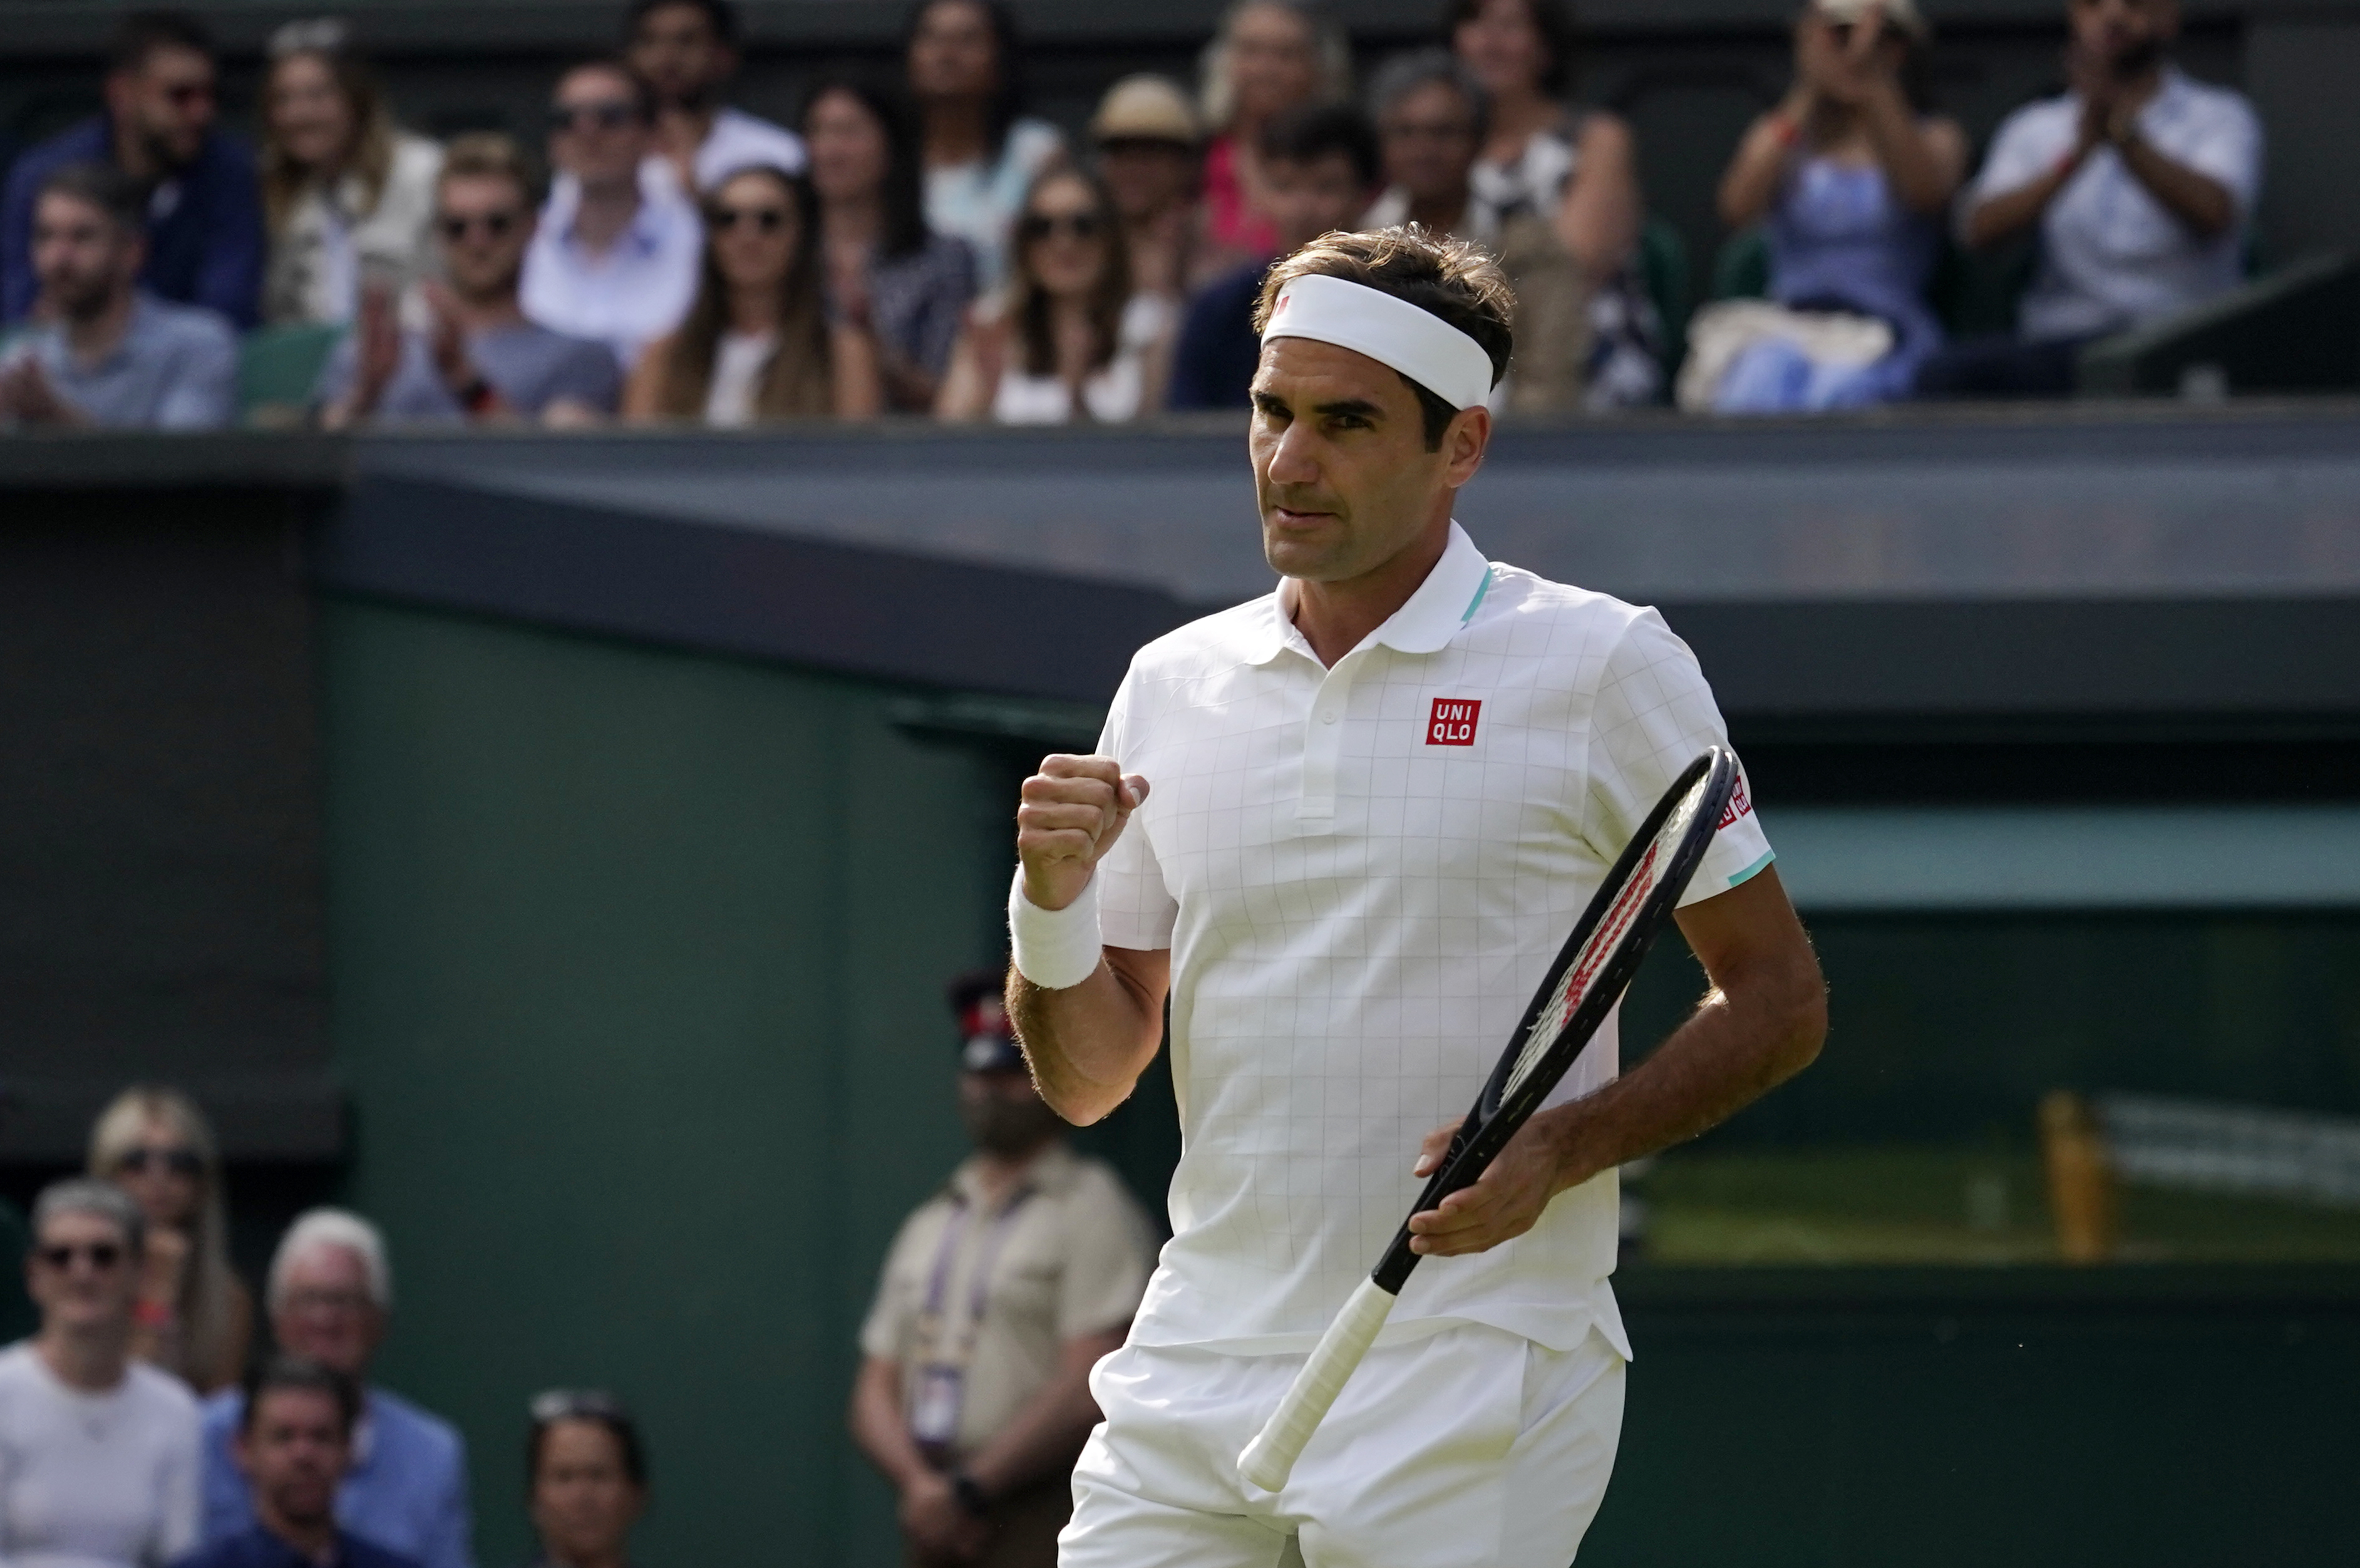 Wimbledon third round free live stream (7/3/21) How to watch Federer, Gauff, time, channel